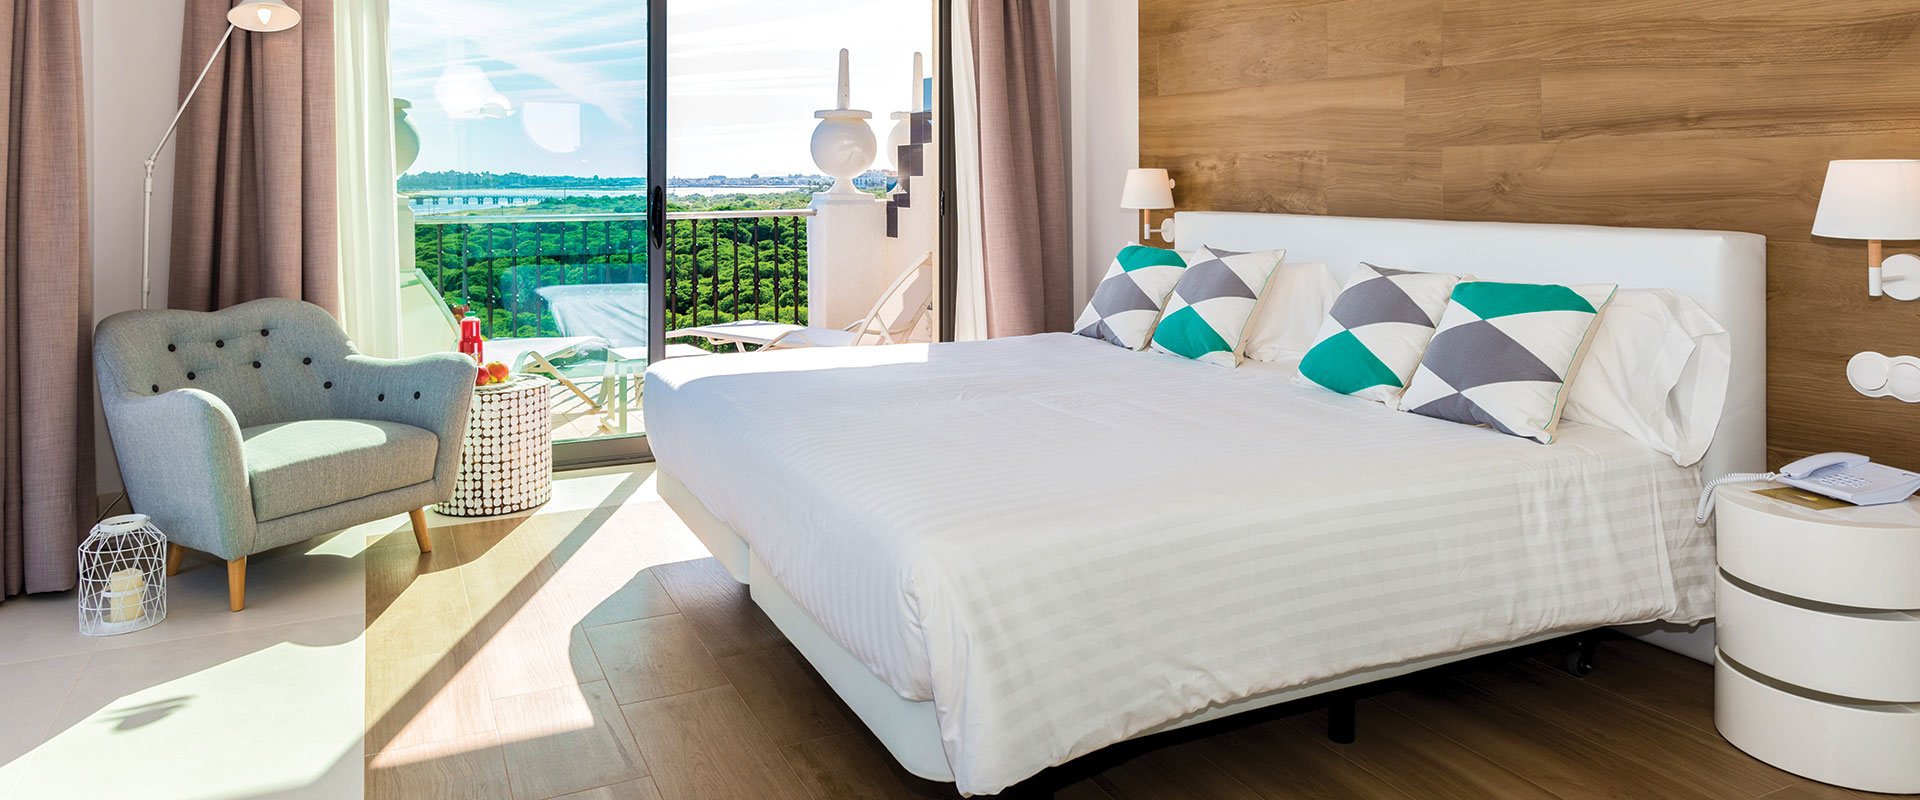 Get a rest in modern rooms TUI BLUE ISLA CRISTINA PALACE Hotel Isla Cristina, Huelva, Spain